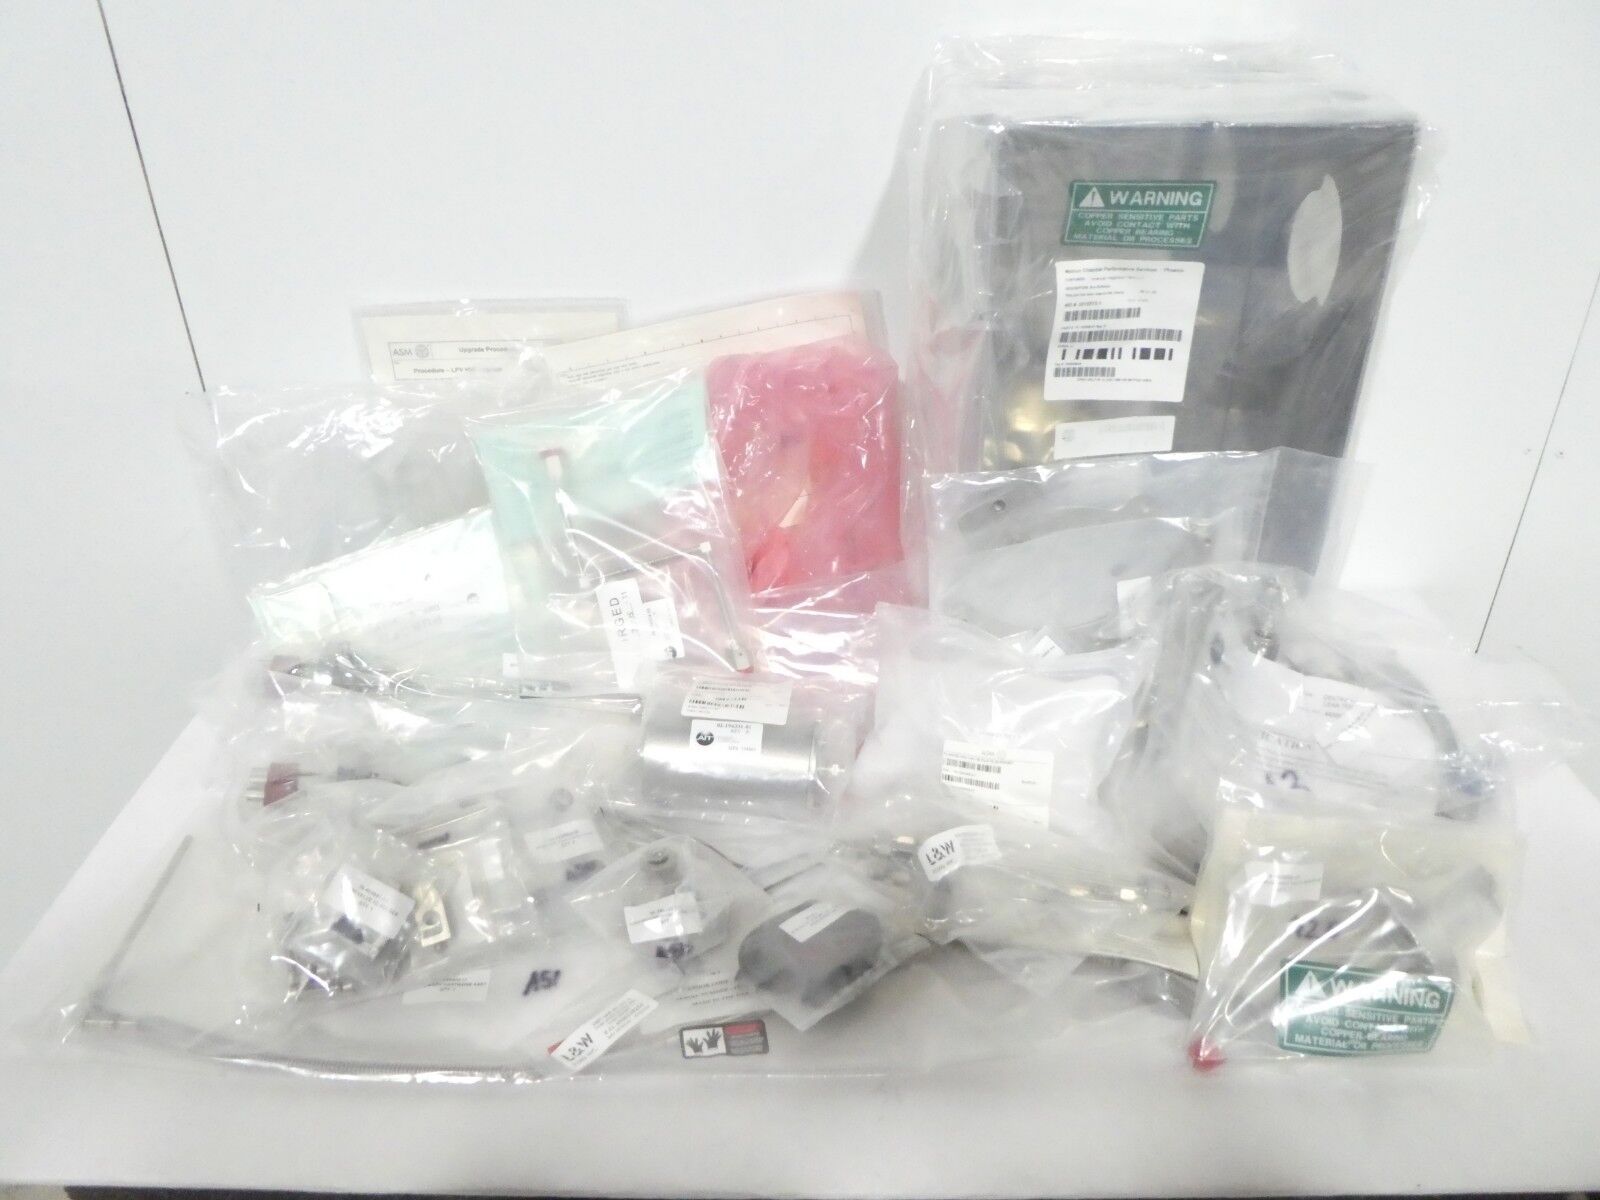 ASM 04-404382-01 Retrofit Kit RFK-V3 LPV HIG 700 LH New Surplus